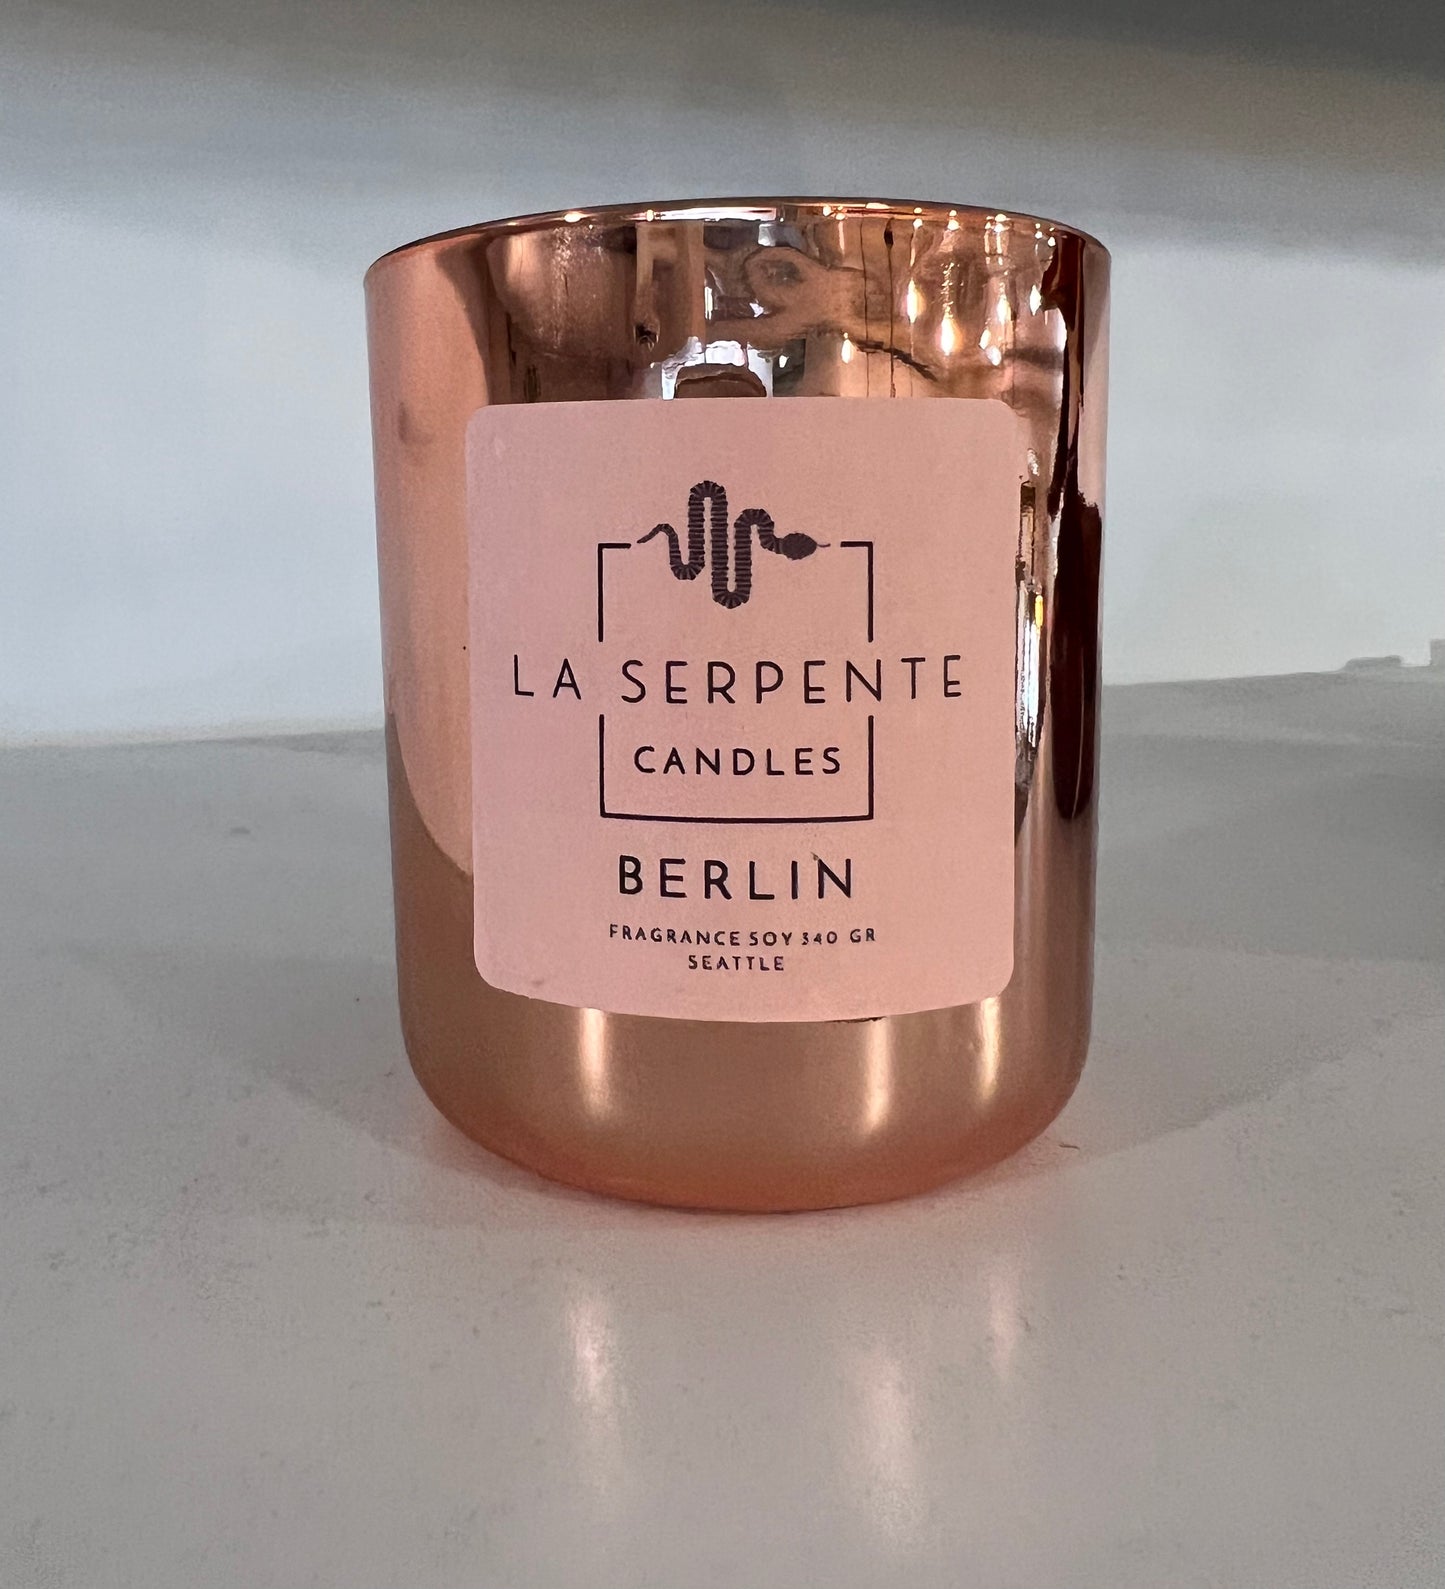 La Serpente Candles - Italian Lemon, Berlin or Marrakesh